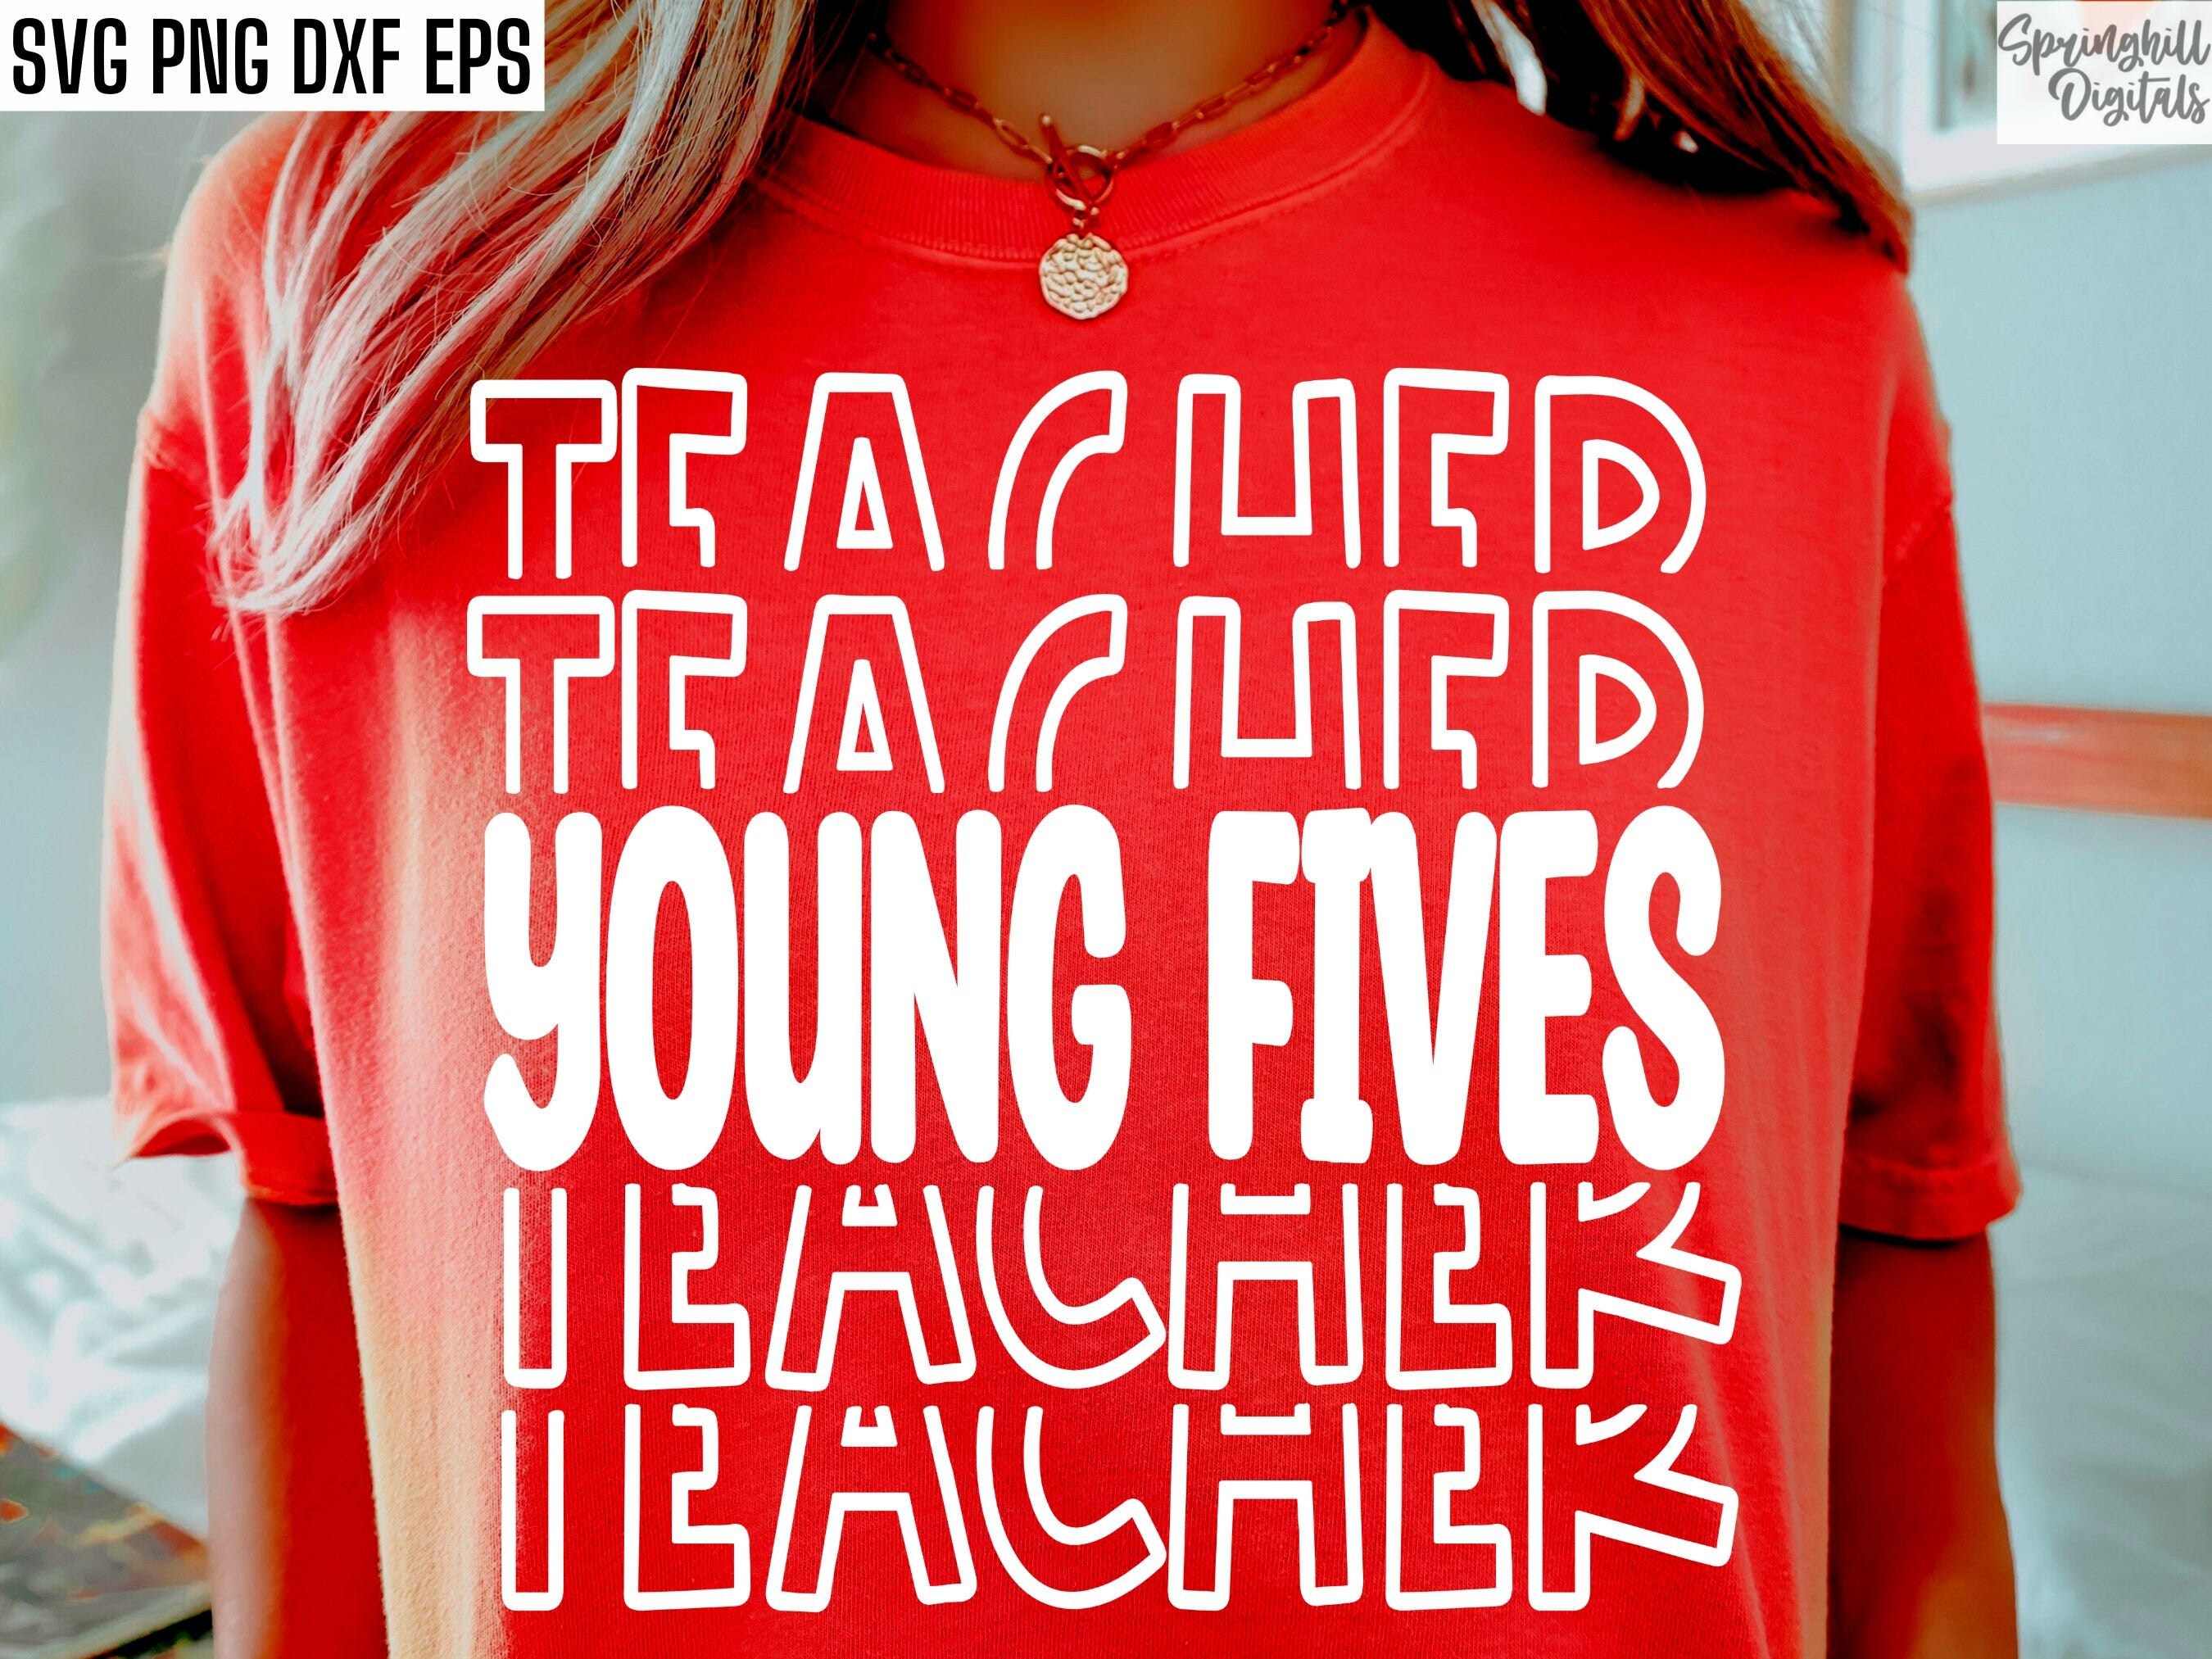 Young Fives Teacher Svg | Preschool Shirt Pngs | Elementary Teaching | Back To School | Pre-K Teach Tshirt Designs | First Day Cut Files